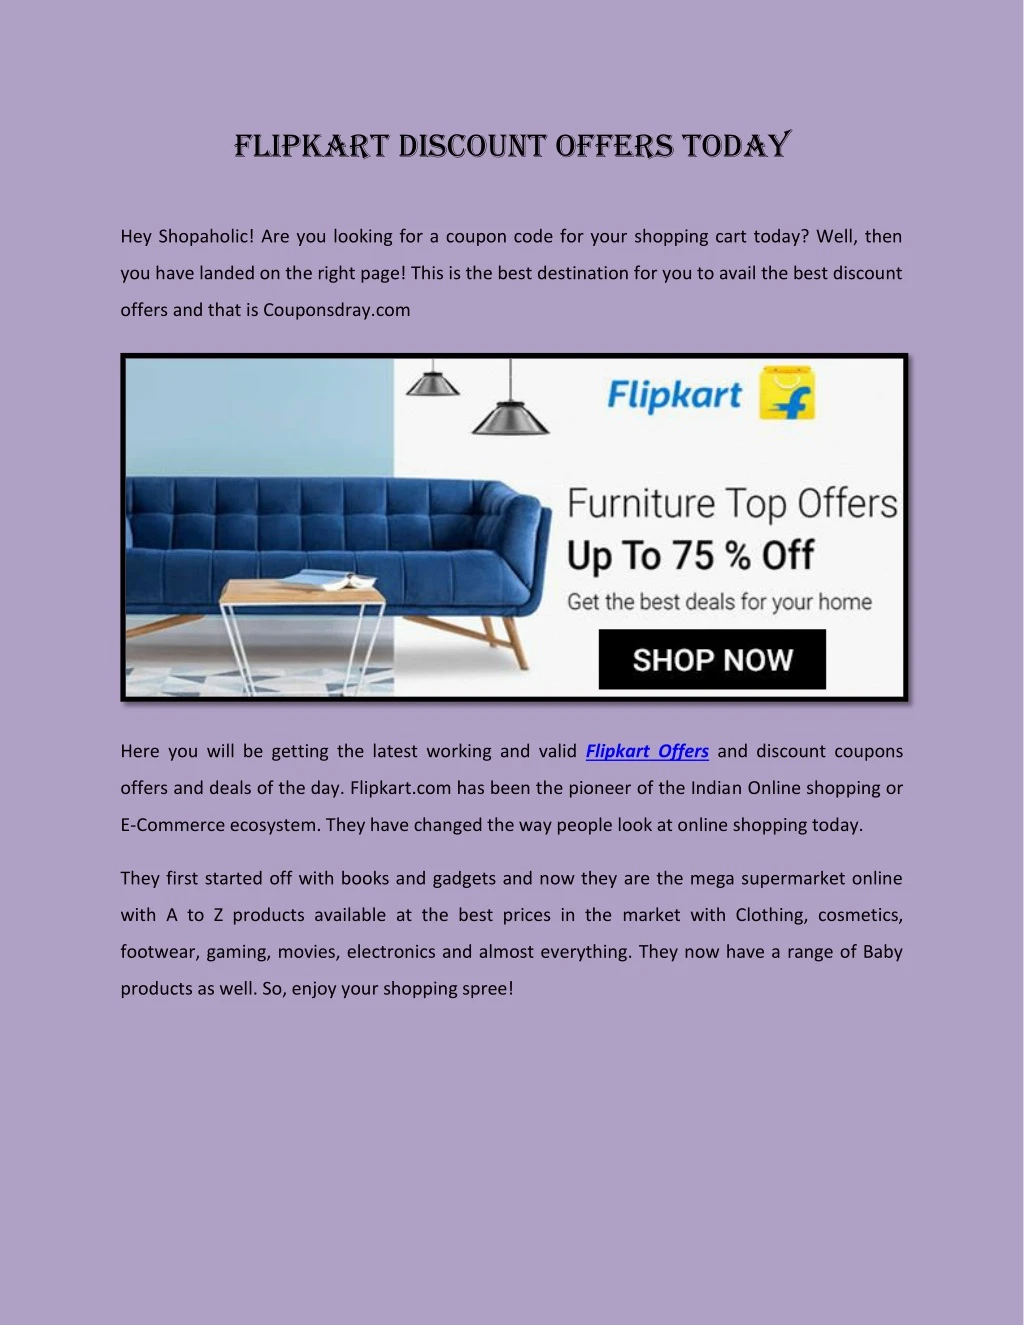 flipkart discount offers today